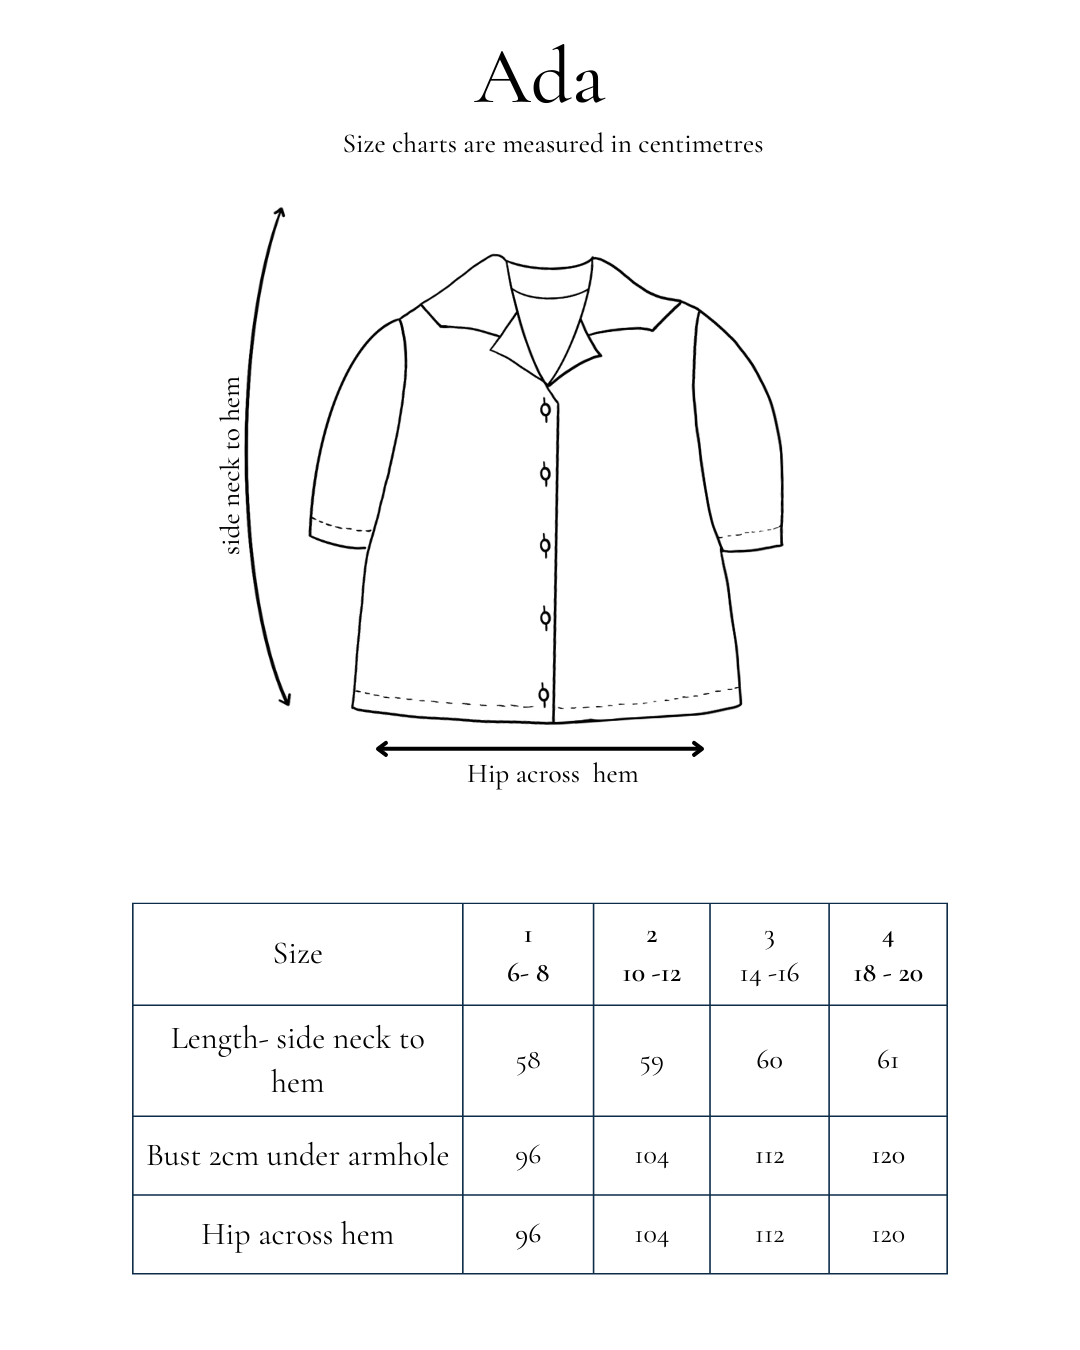 Garment measurement guide for Ada short sleeve blouse